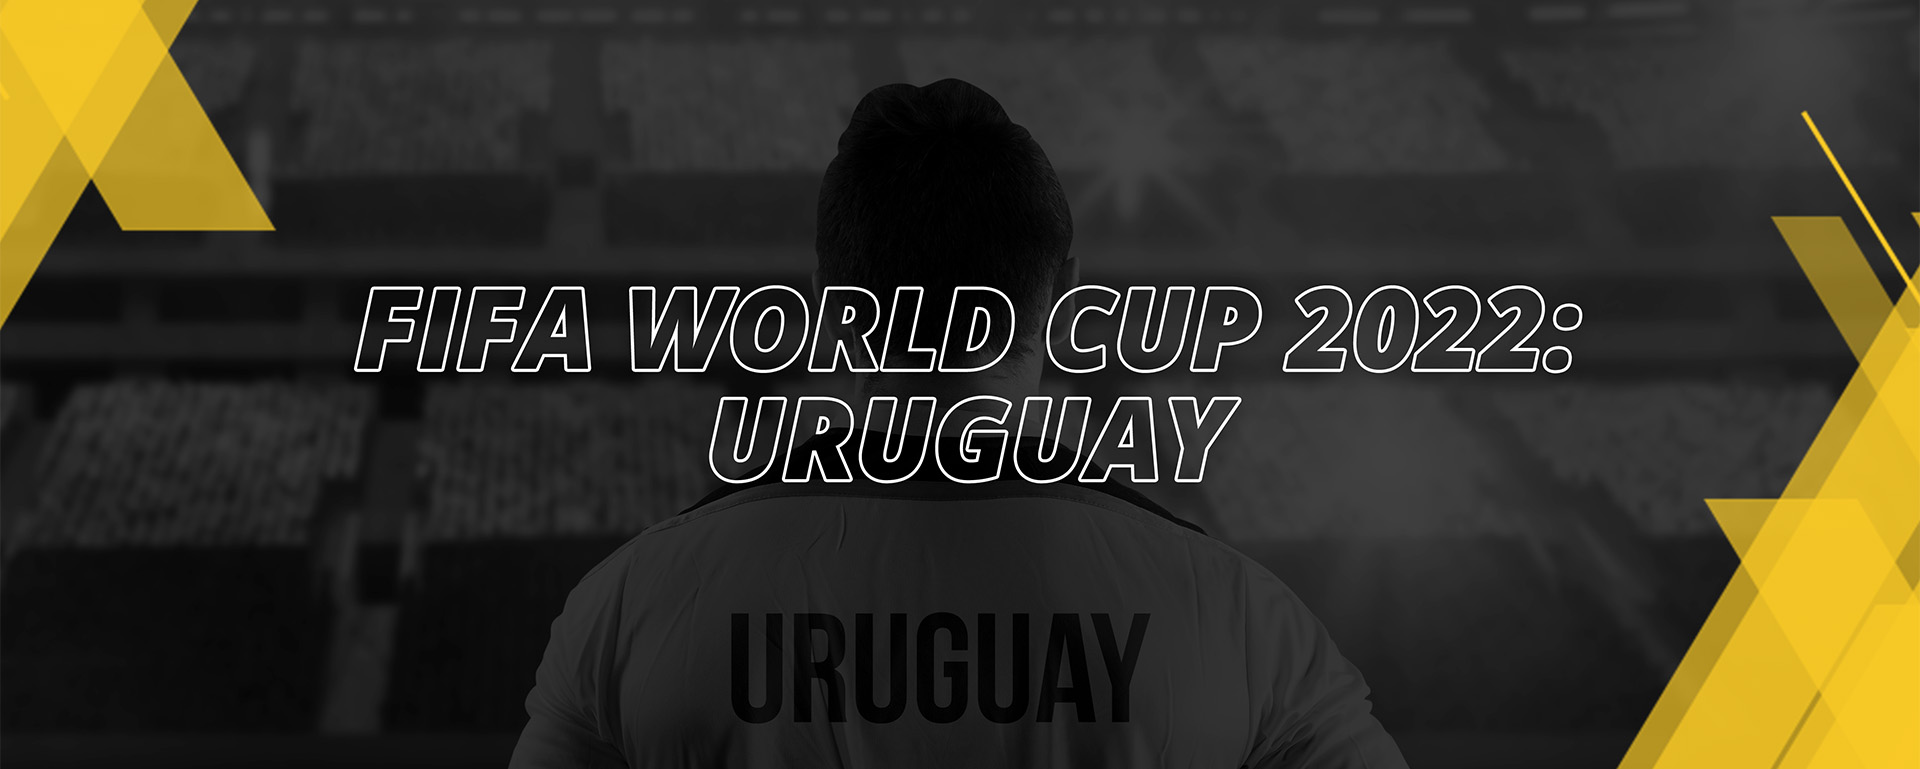 URUGUAY – FIFA WORLD CUP QATAR 2022 – FAN’S COMPENDIUM